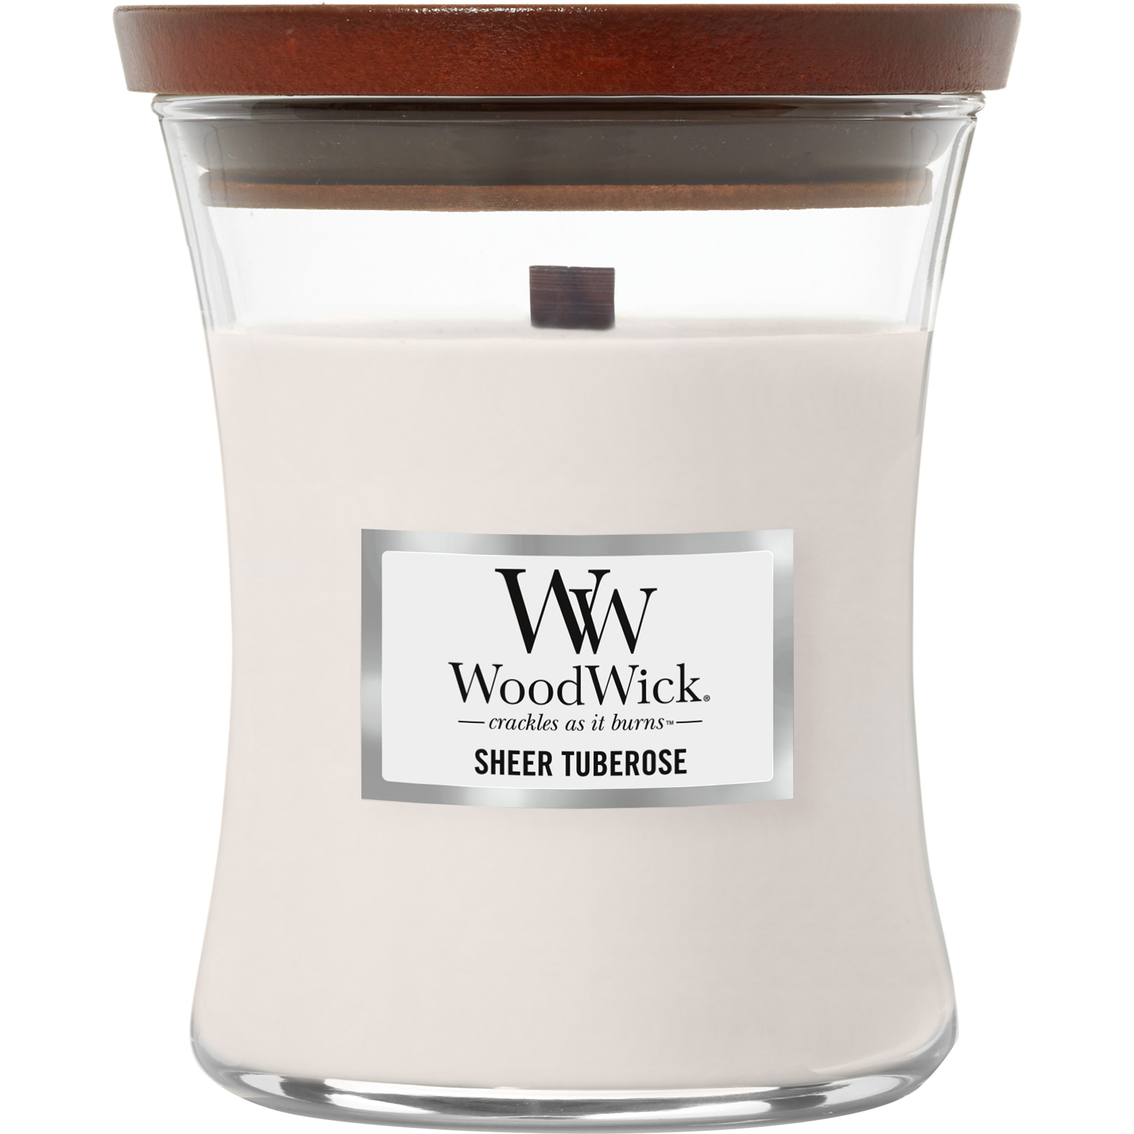 Woodwick Sheer Tuberose Medium Candle